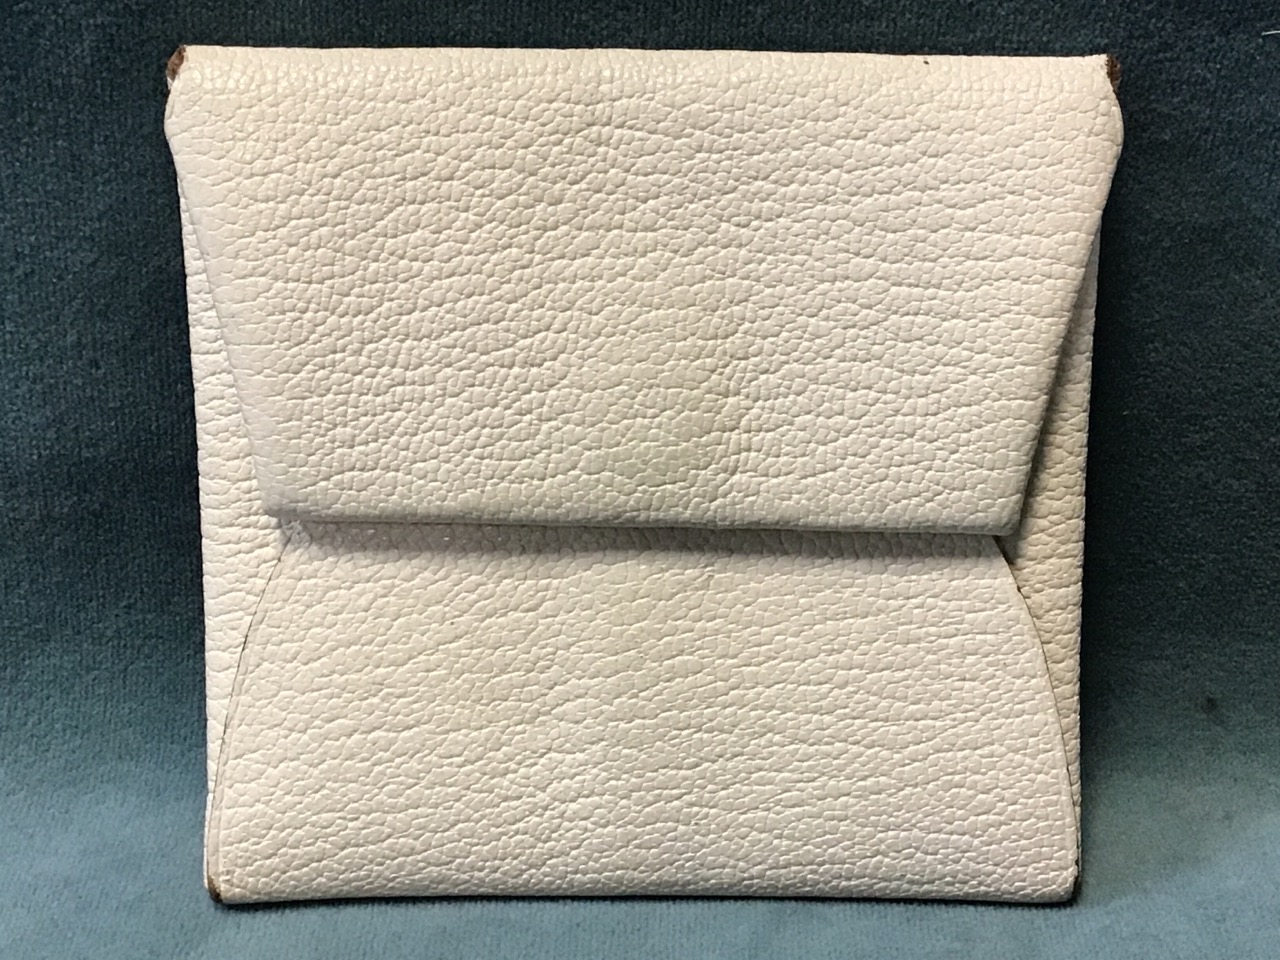 A Hermès white calfskin Bastia envelope style coin purse with snap closure.